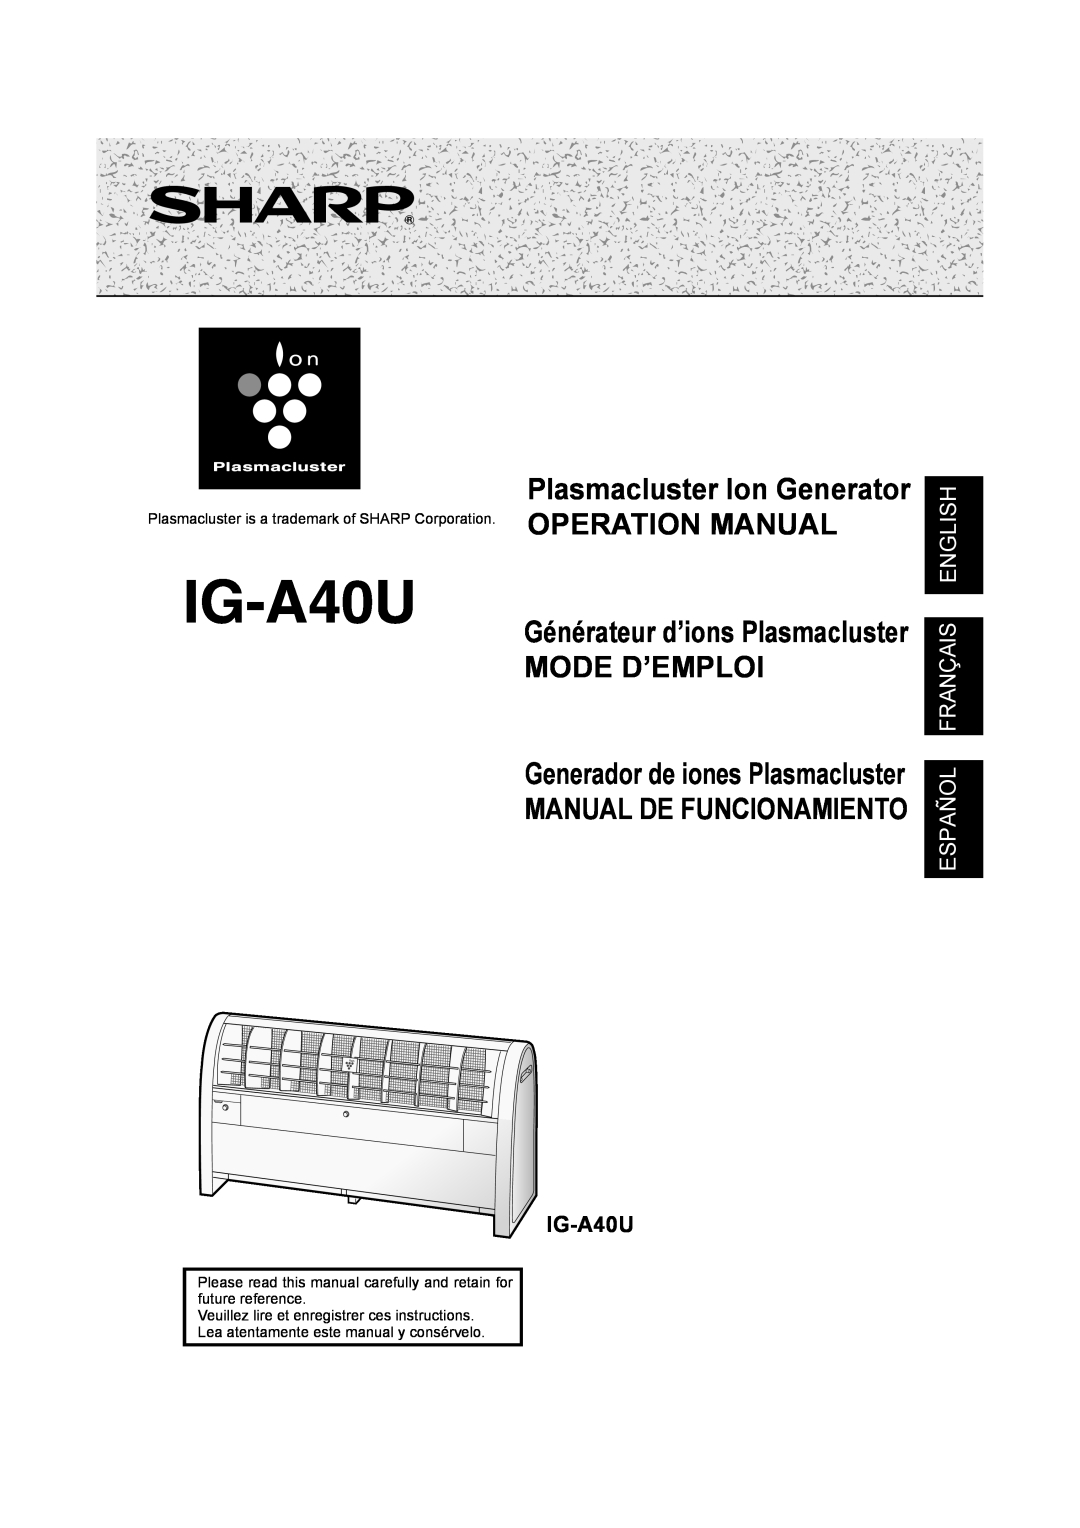 Sharp IG-A40U operation manual Plasmacluster Ion Generator, Mode D’Emploi, Manual De Funcionamiento, English, Español 